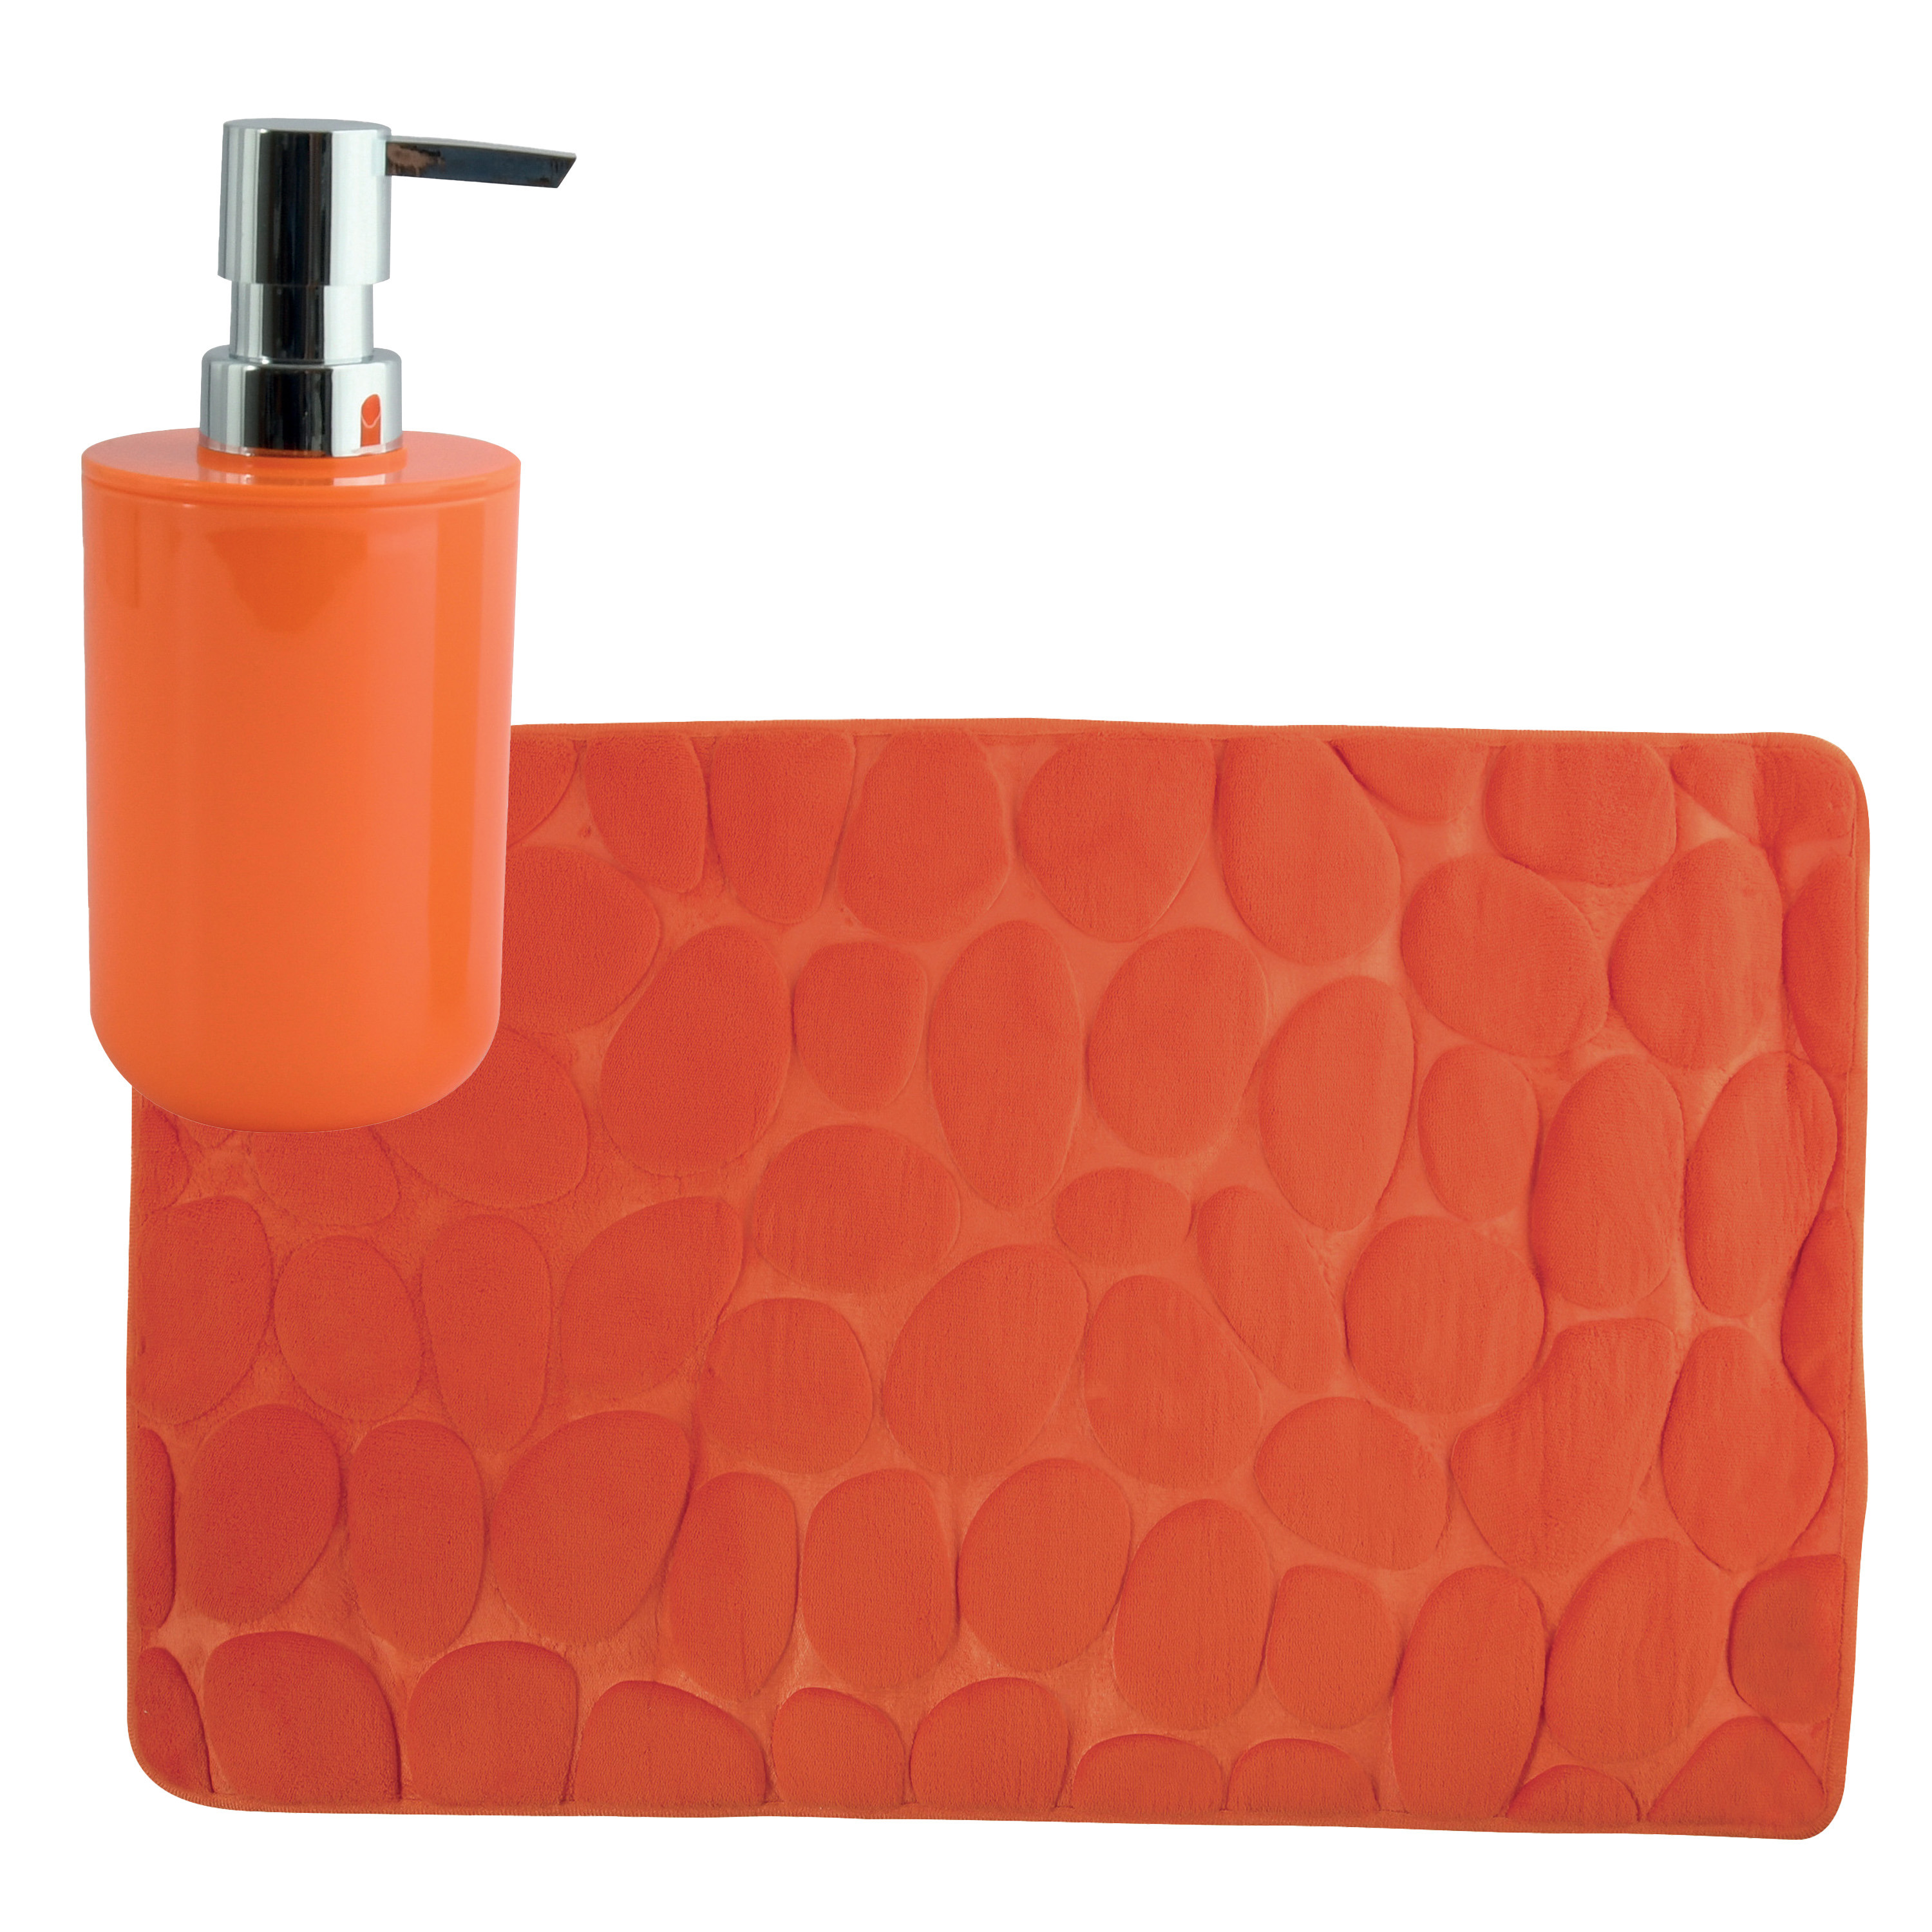 MSV badkamer droogloop mat-tapijt Kiezel 50 x 80 cm zelfde kleur zeeppompje oranje